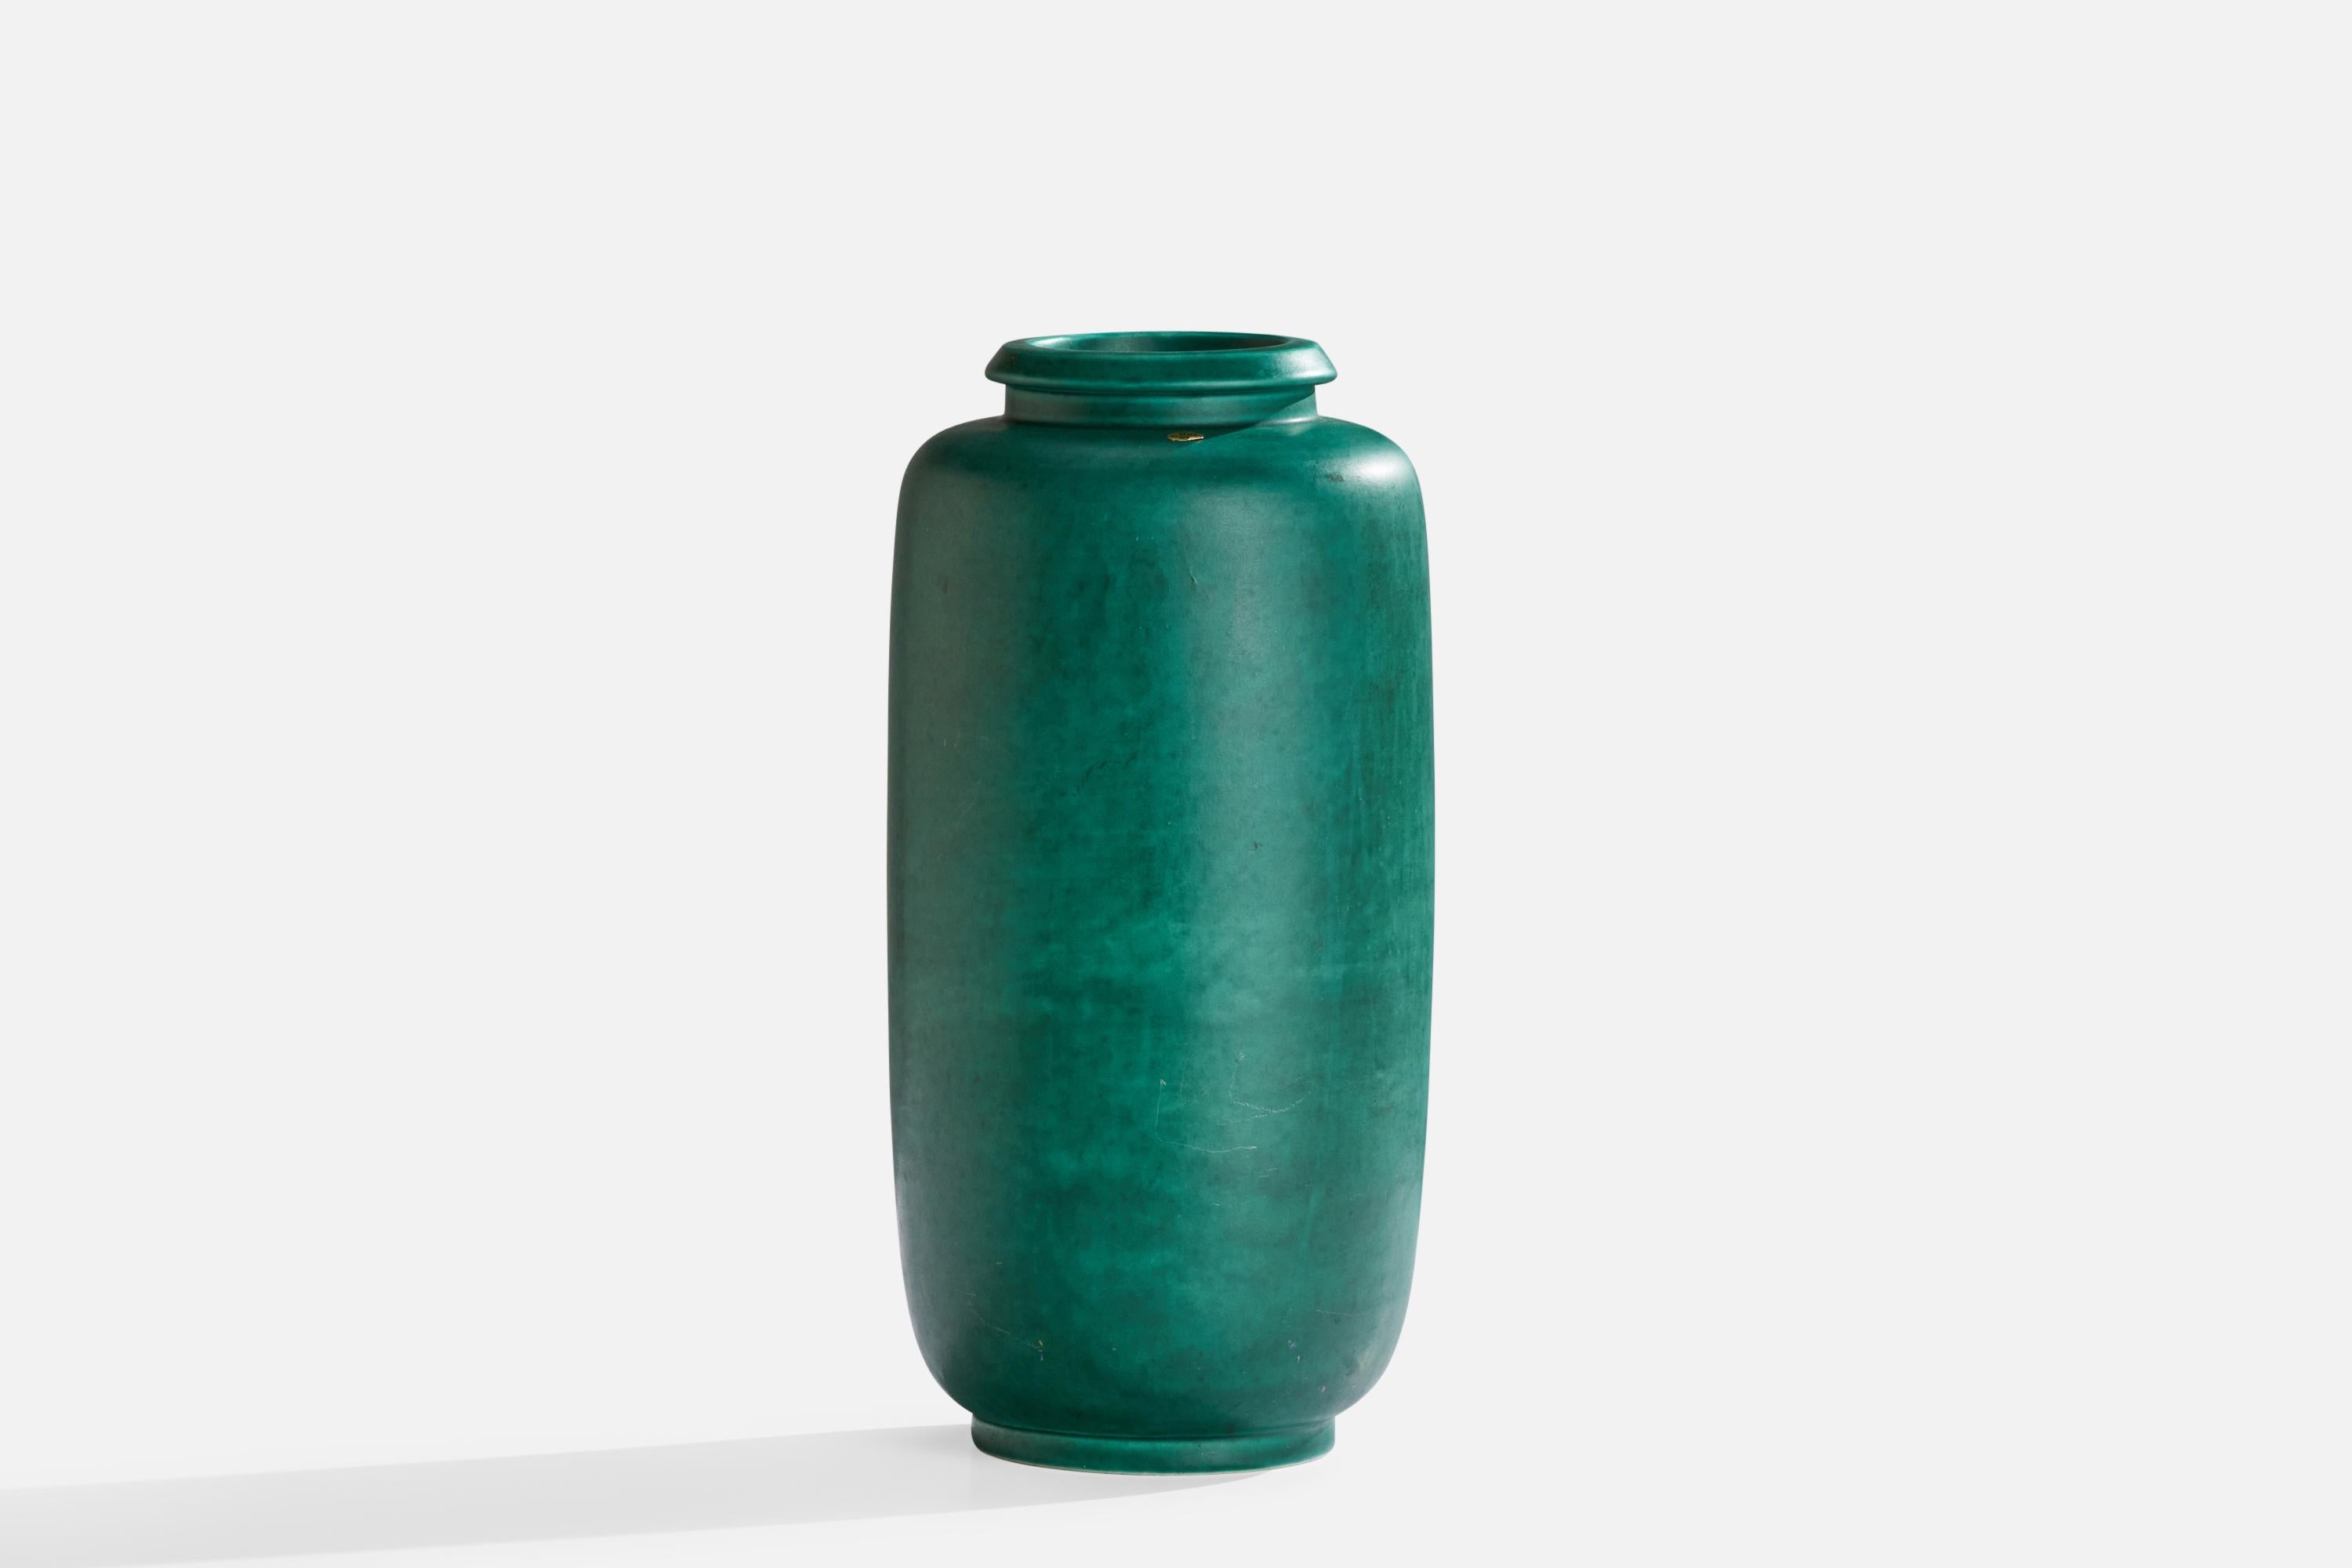 A green-glazed stoneware vase designed by Wilhelm Kåge and produced by Gustavsberg, Sweden, c. 1950s.